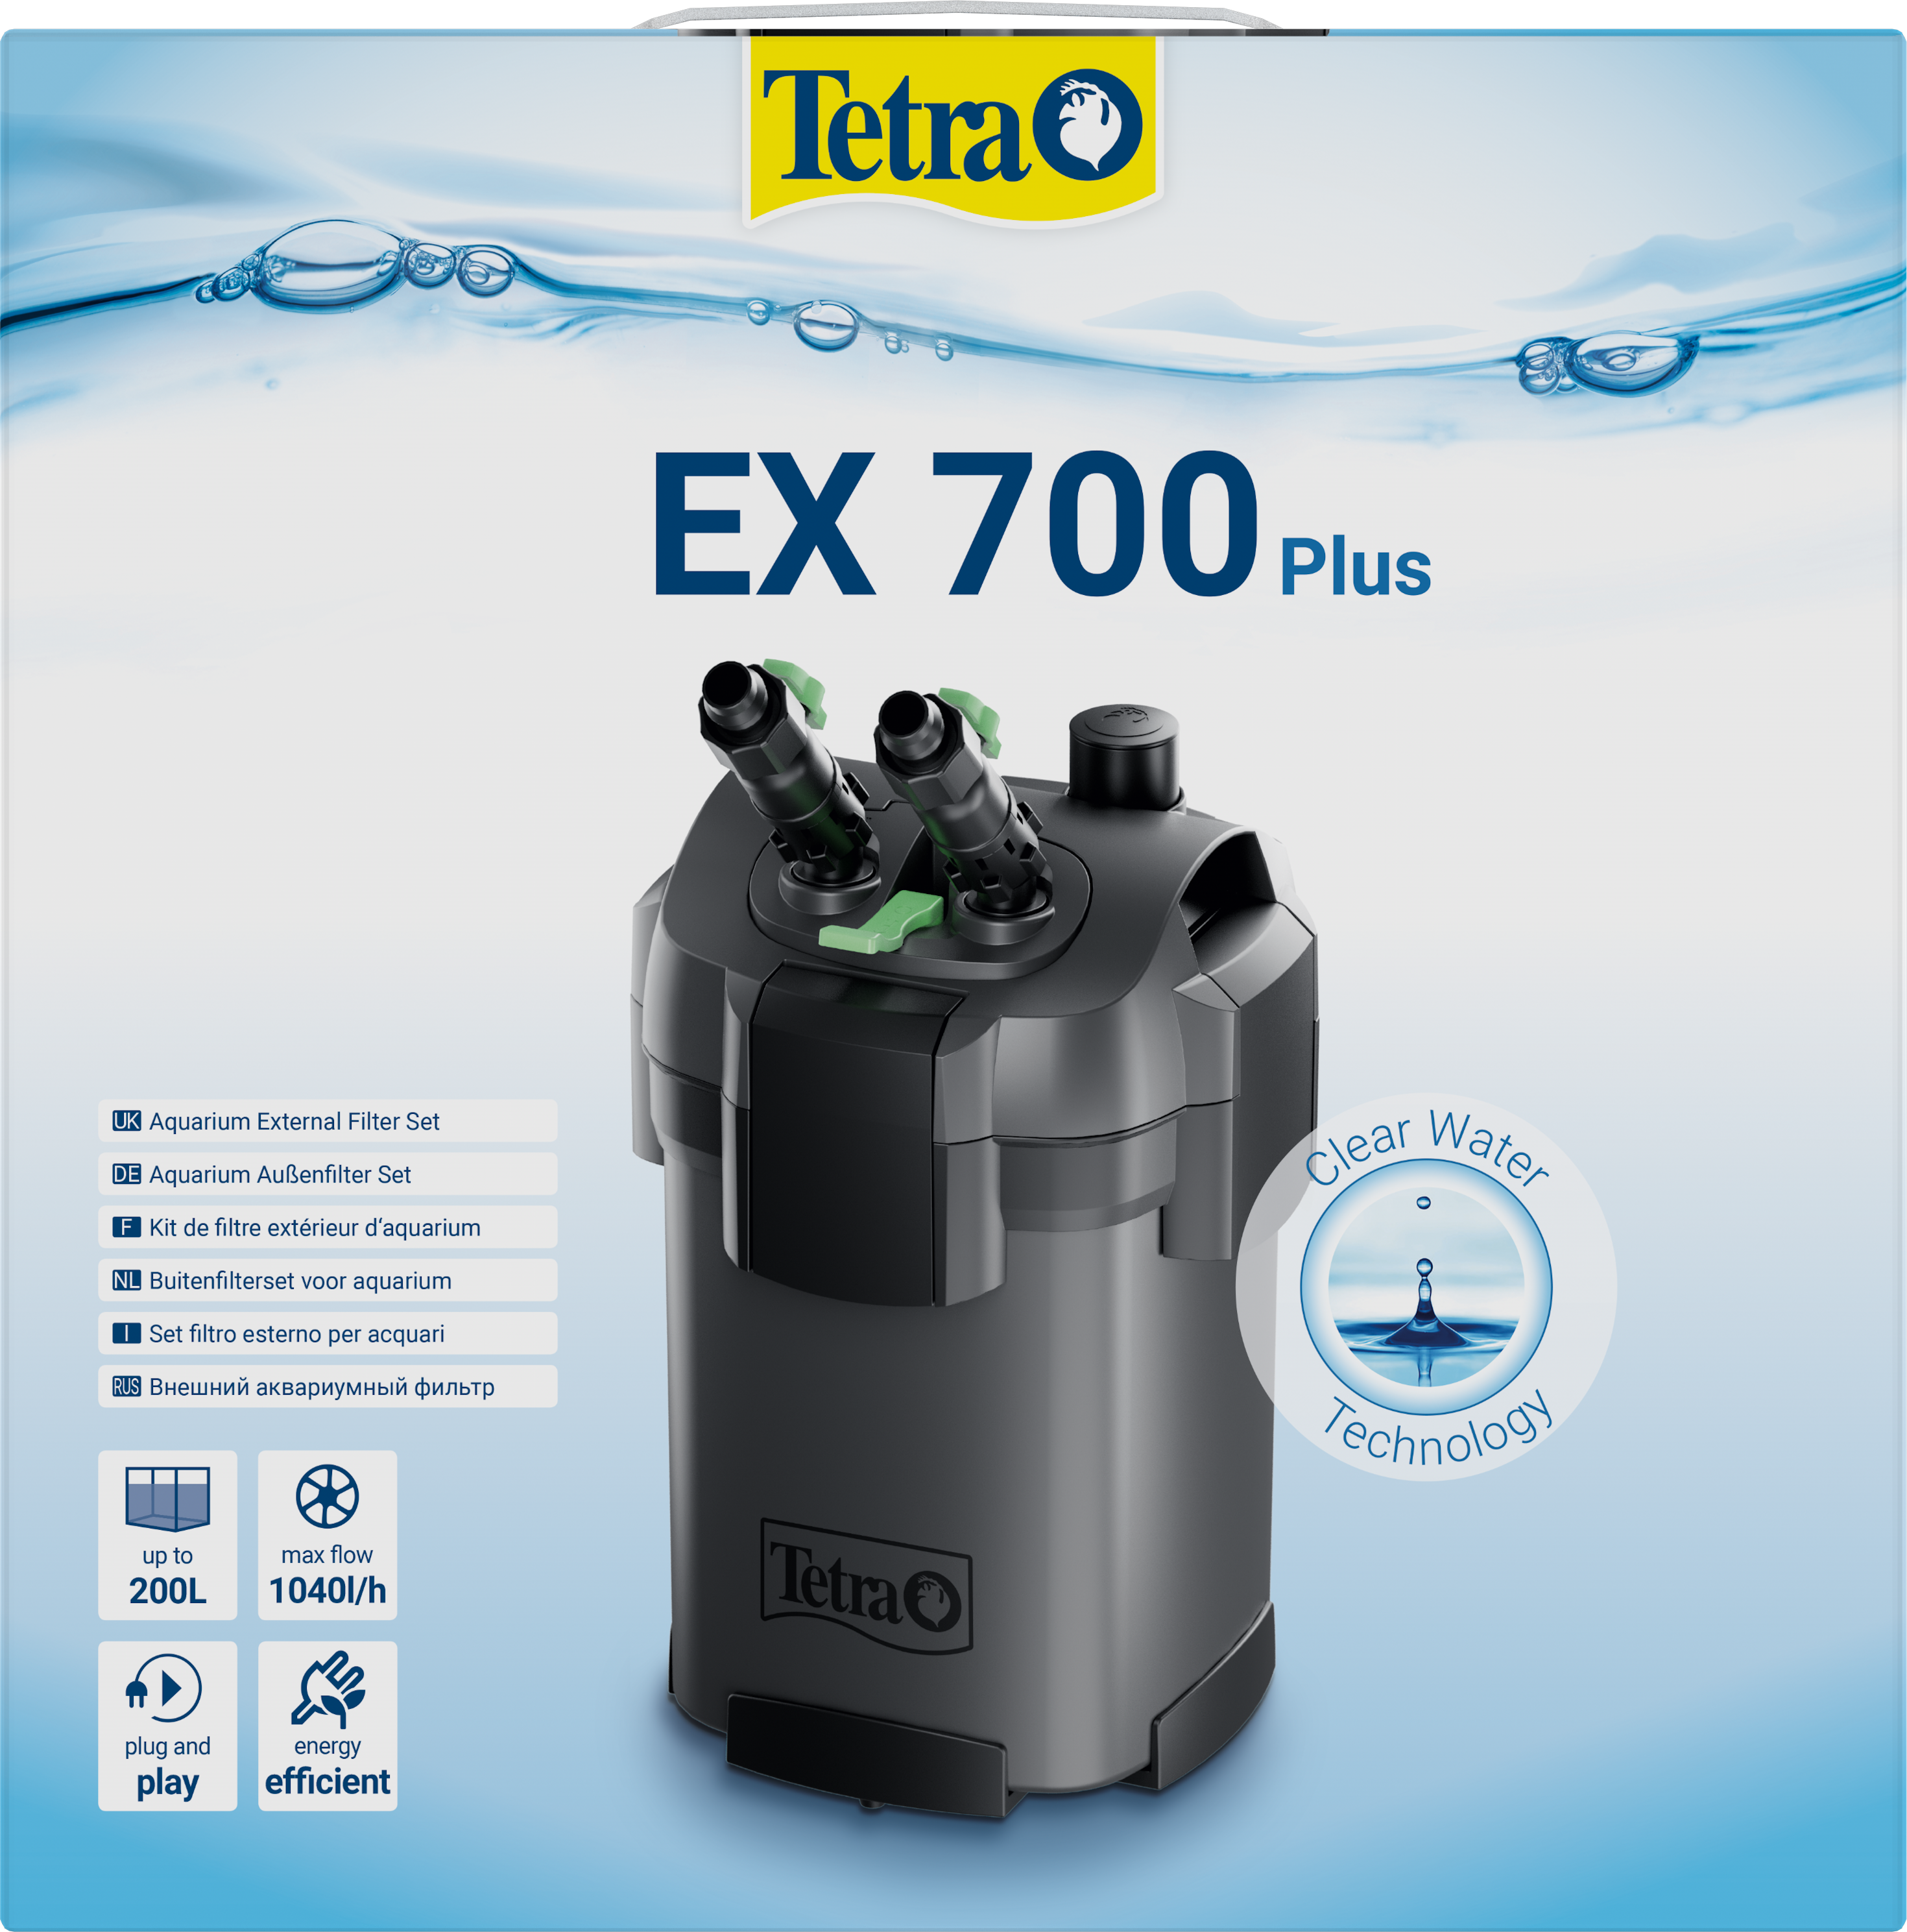 Darts monteren Verplicht Tetra EX 700 Plus complete buitenfilterset: Tetra